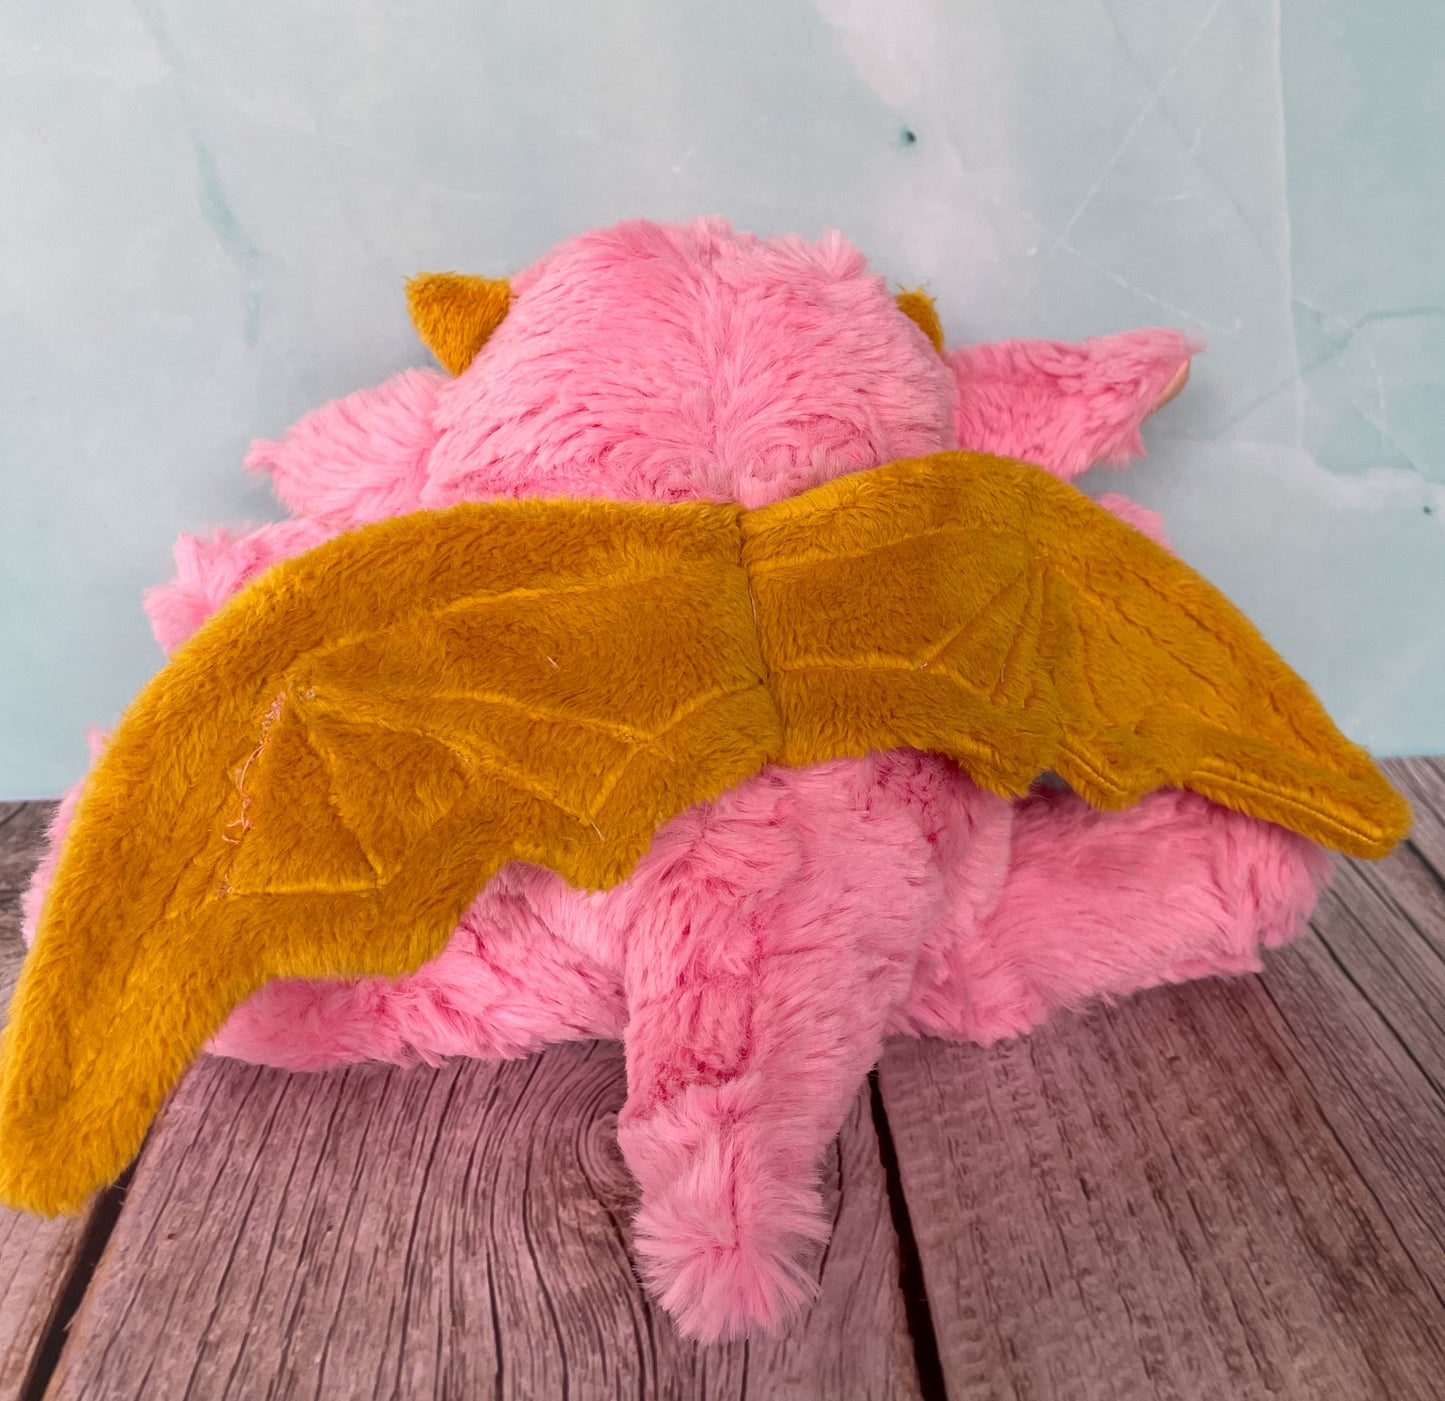 Dragon - Handmade Stuffed Animal Plush